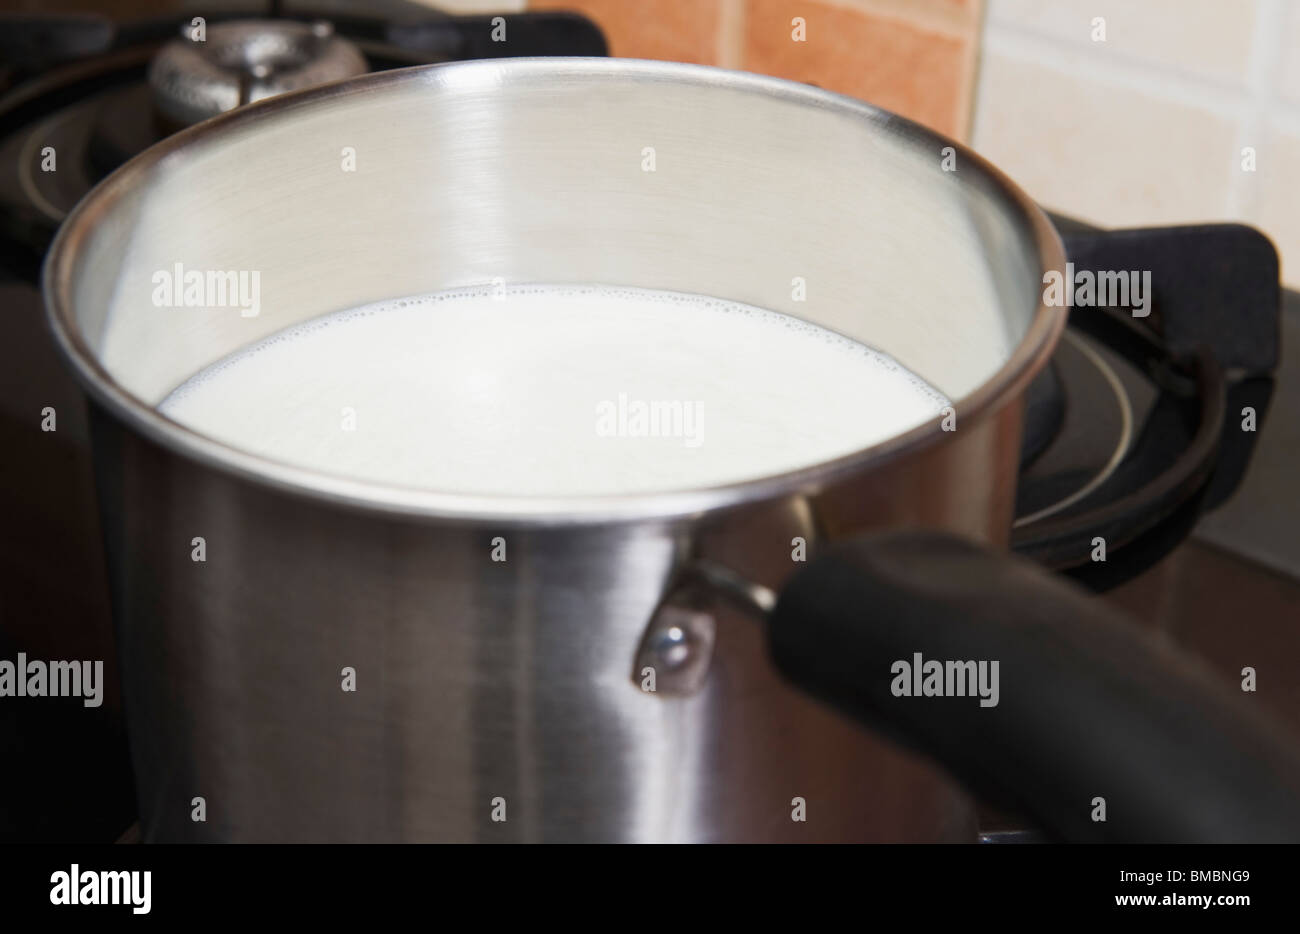 https://c8.alamy.com/comp/BMBNG9/milk-in-a-saucepan-on-a-gas-stove-burner-BMBNG9.jpg